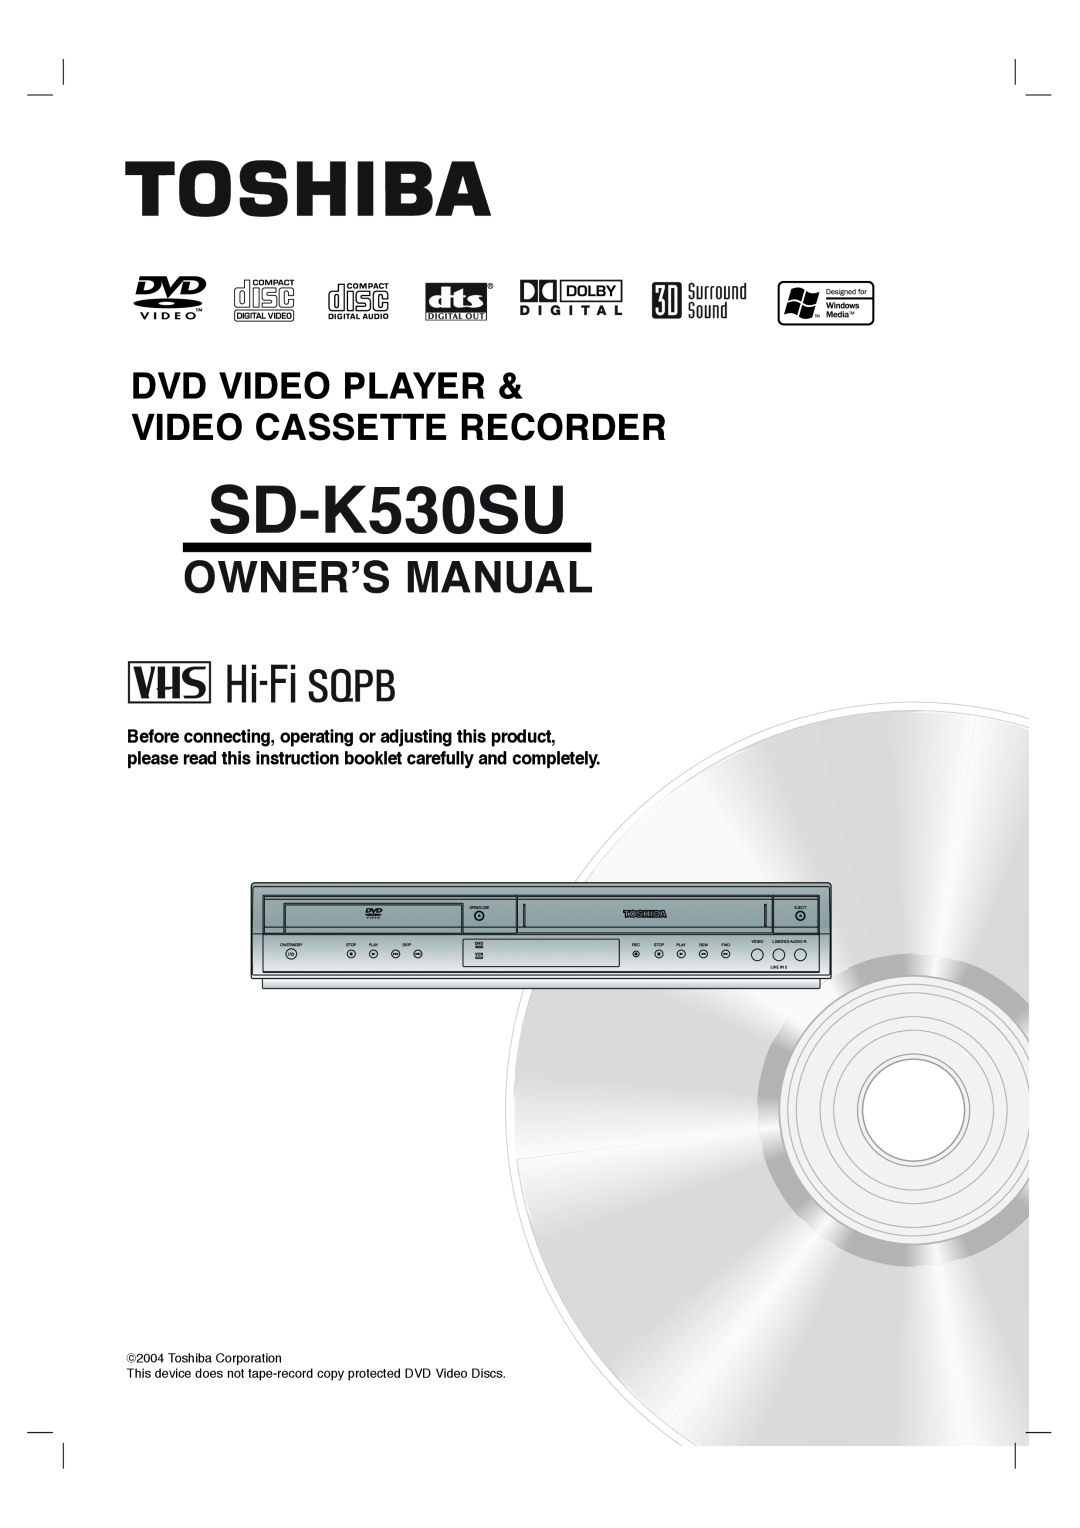 Toshiba SD-K530SU owner manual Dvd Video Player & Video Cassette Recorder, Toshiba Corporation 